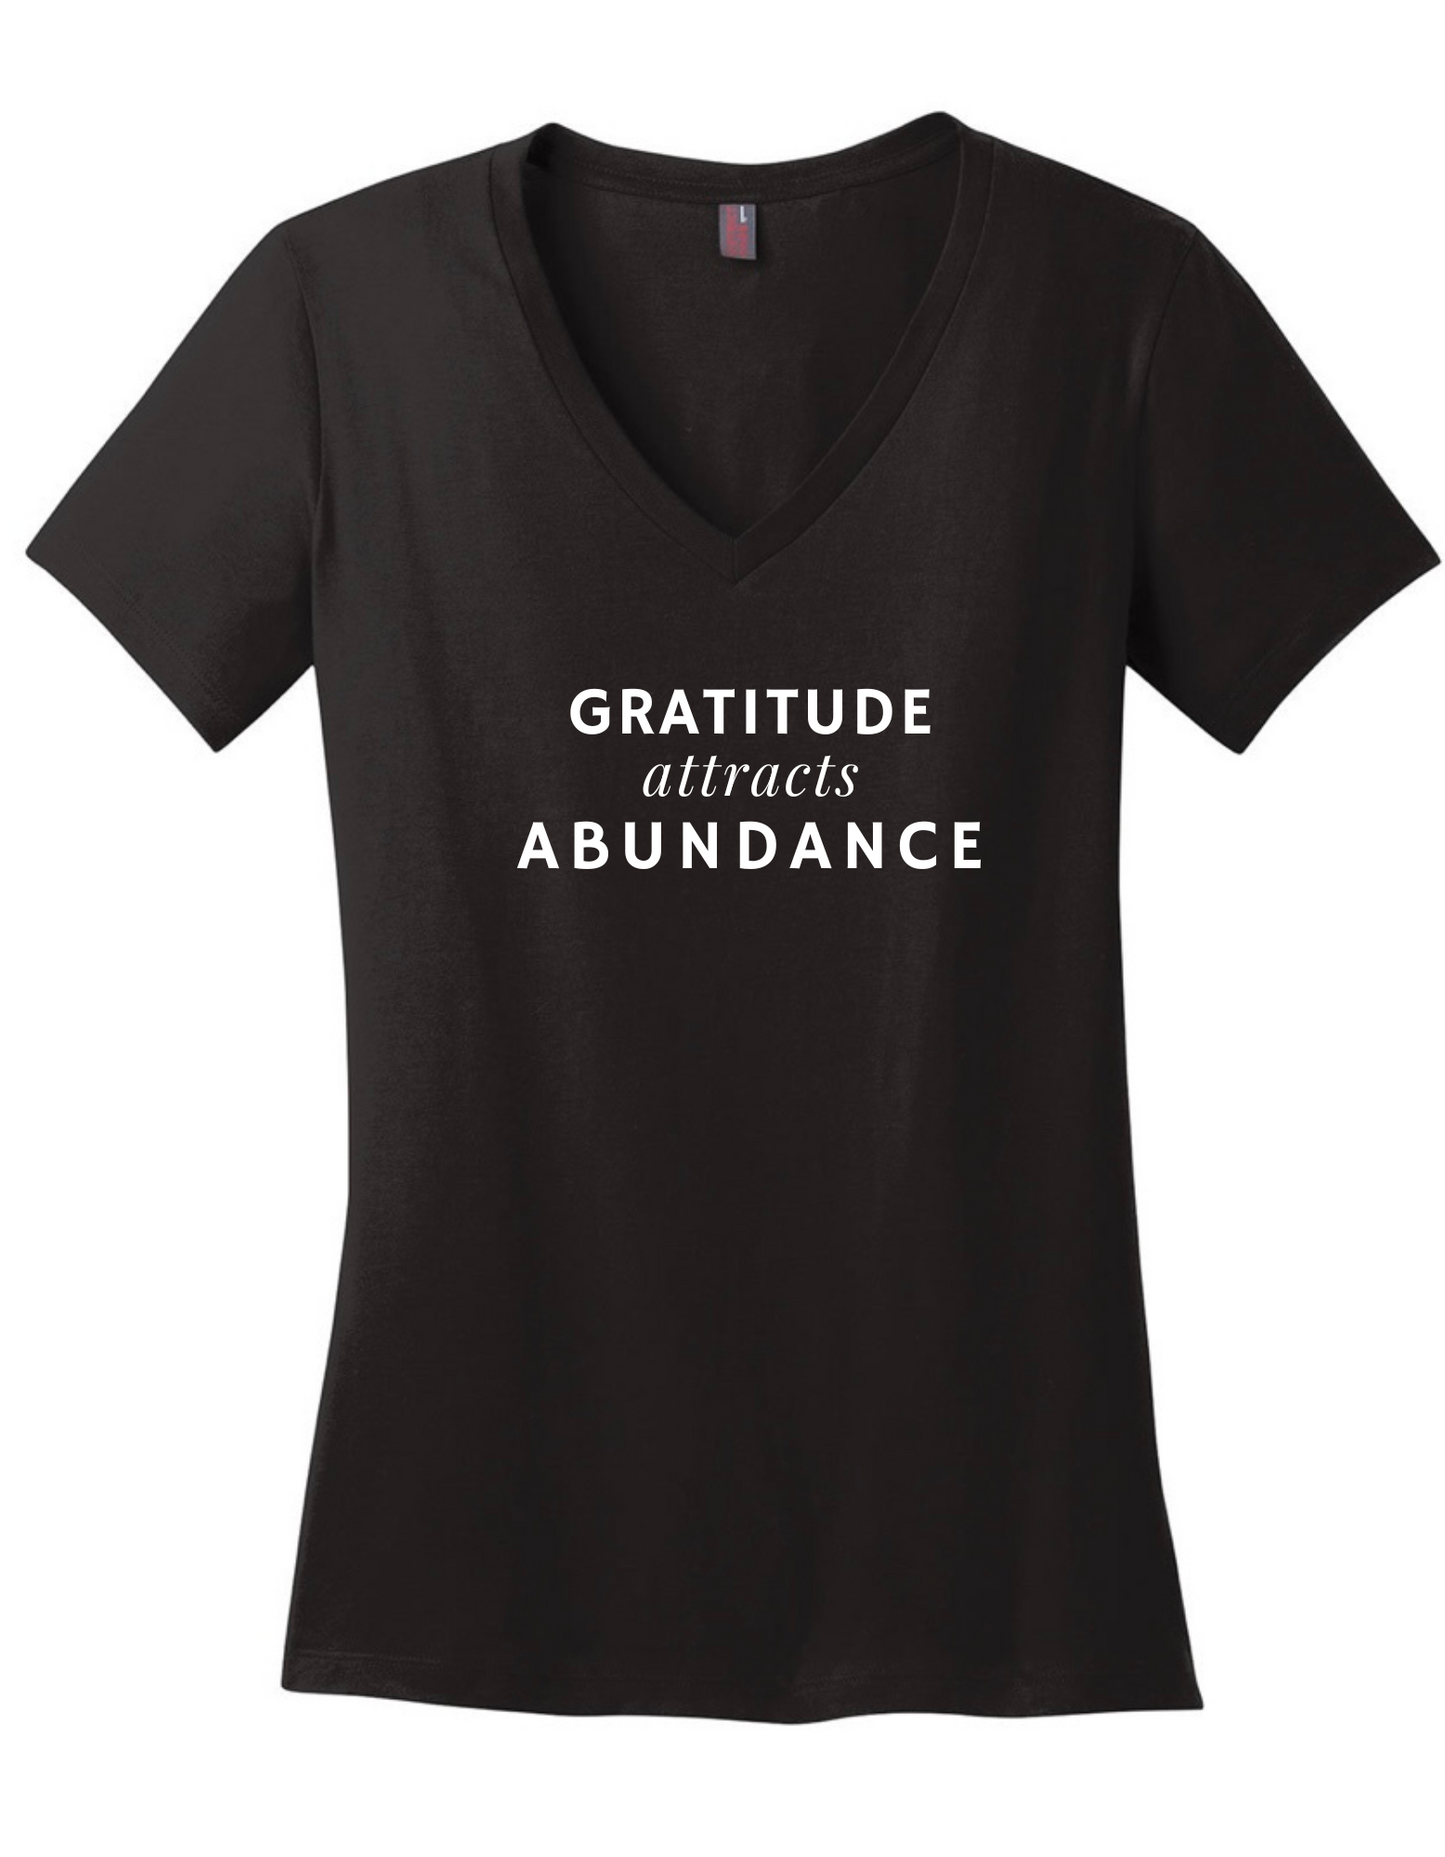 Gratitude attracts Abundance